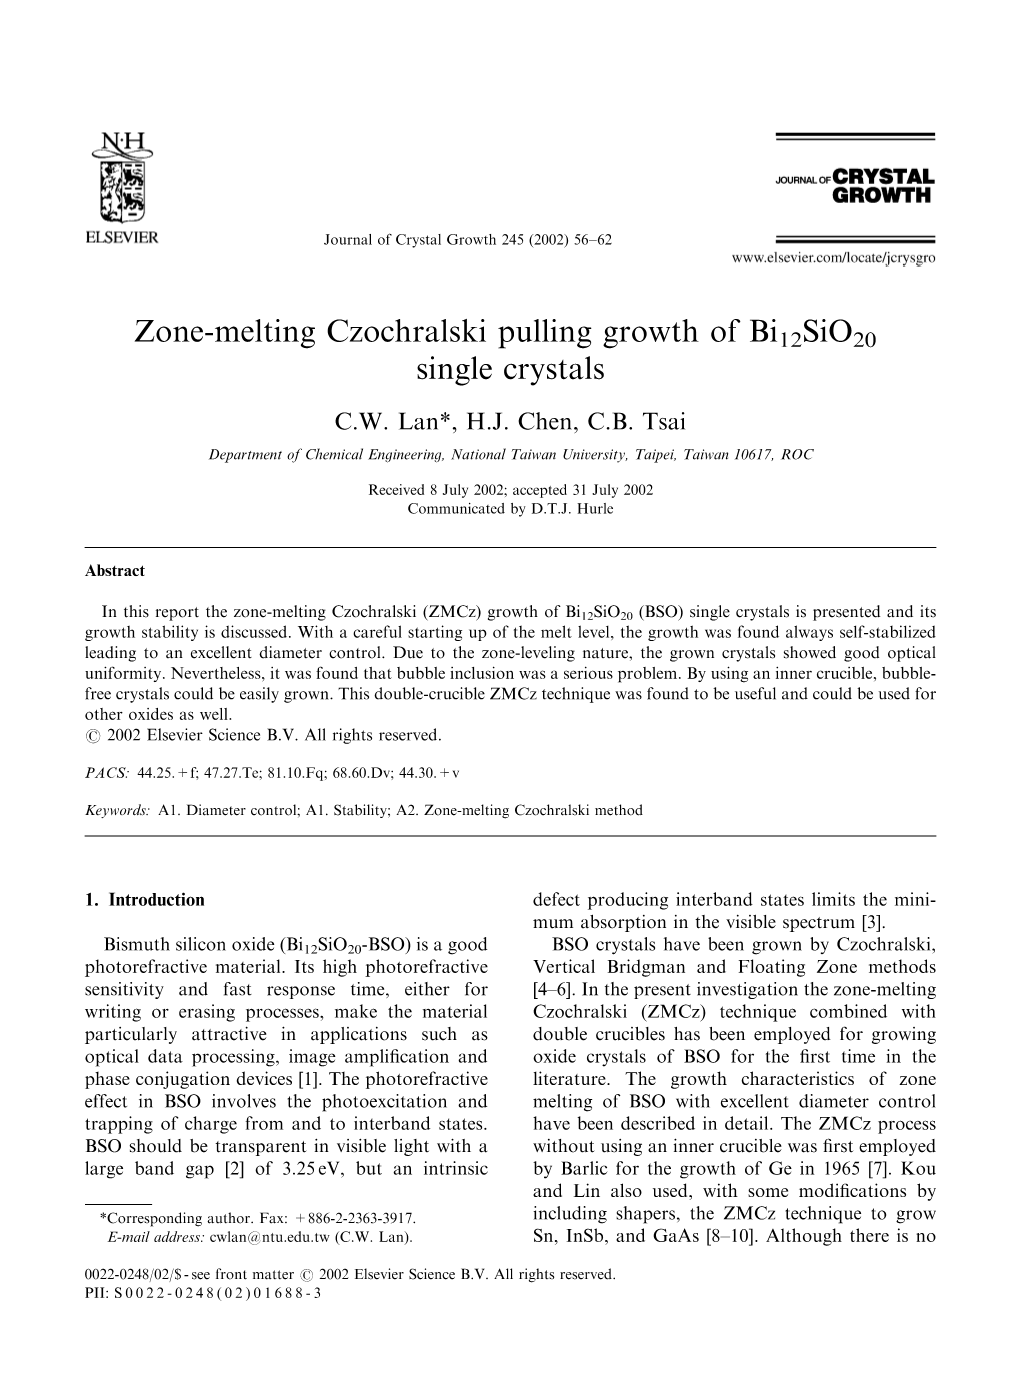 Zone-Melting Czochralski Pulling Growth of Bi12sio20 Single Crystals